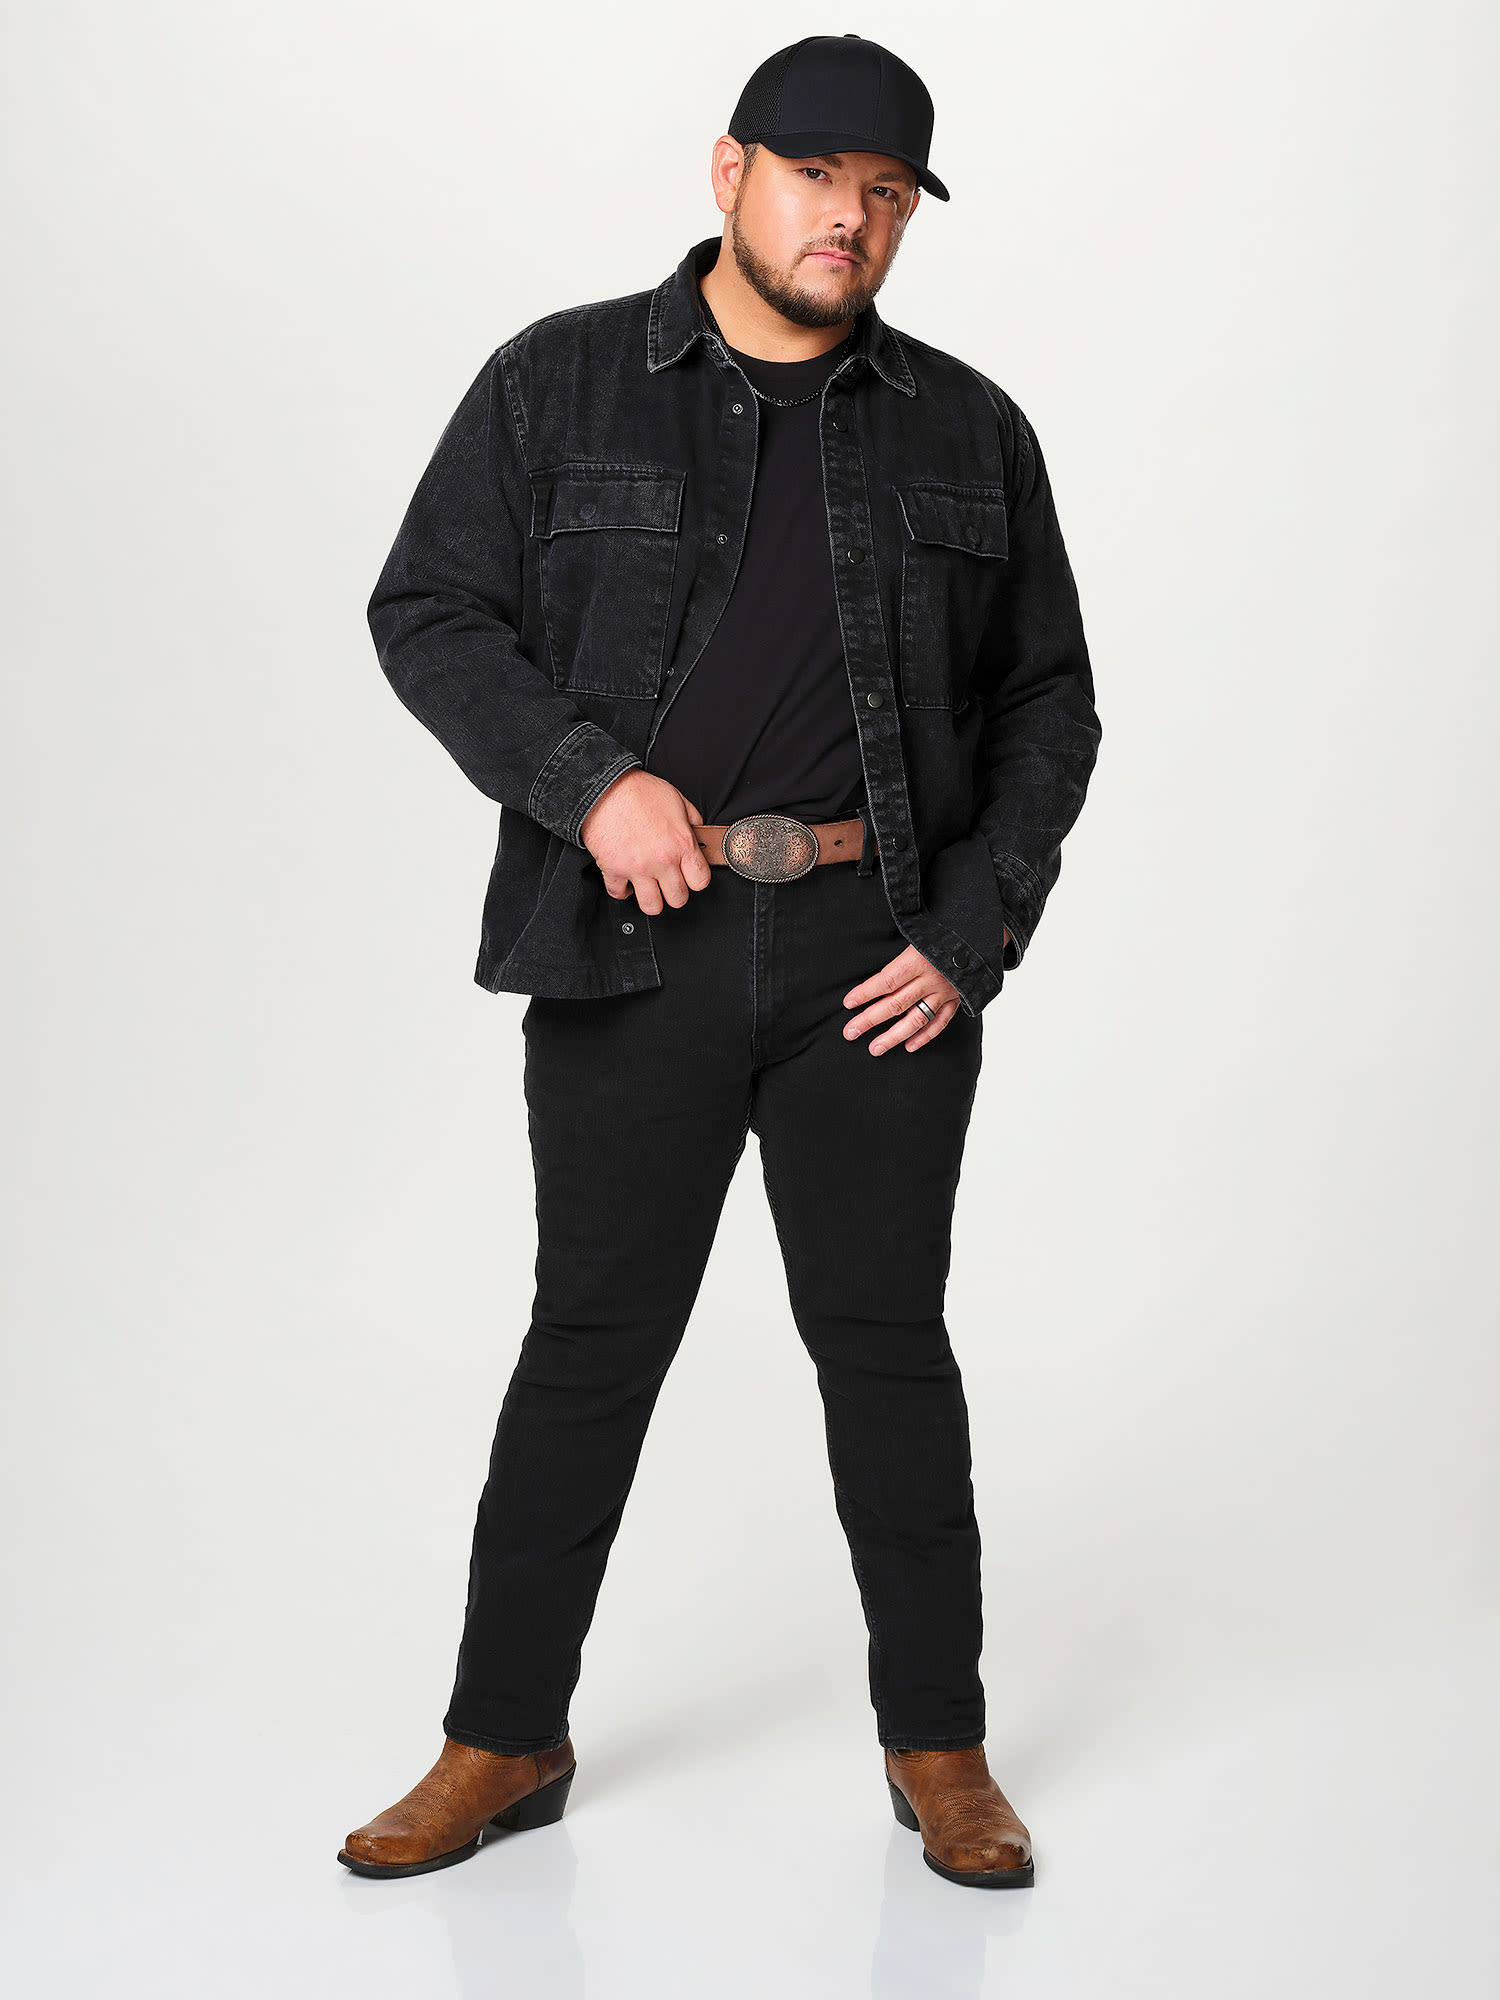 Who Is ‘The Voice’ Season 25 Finalist Josh Sanders? Meet the Rocker Turned Country Artist